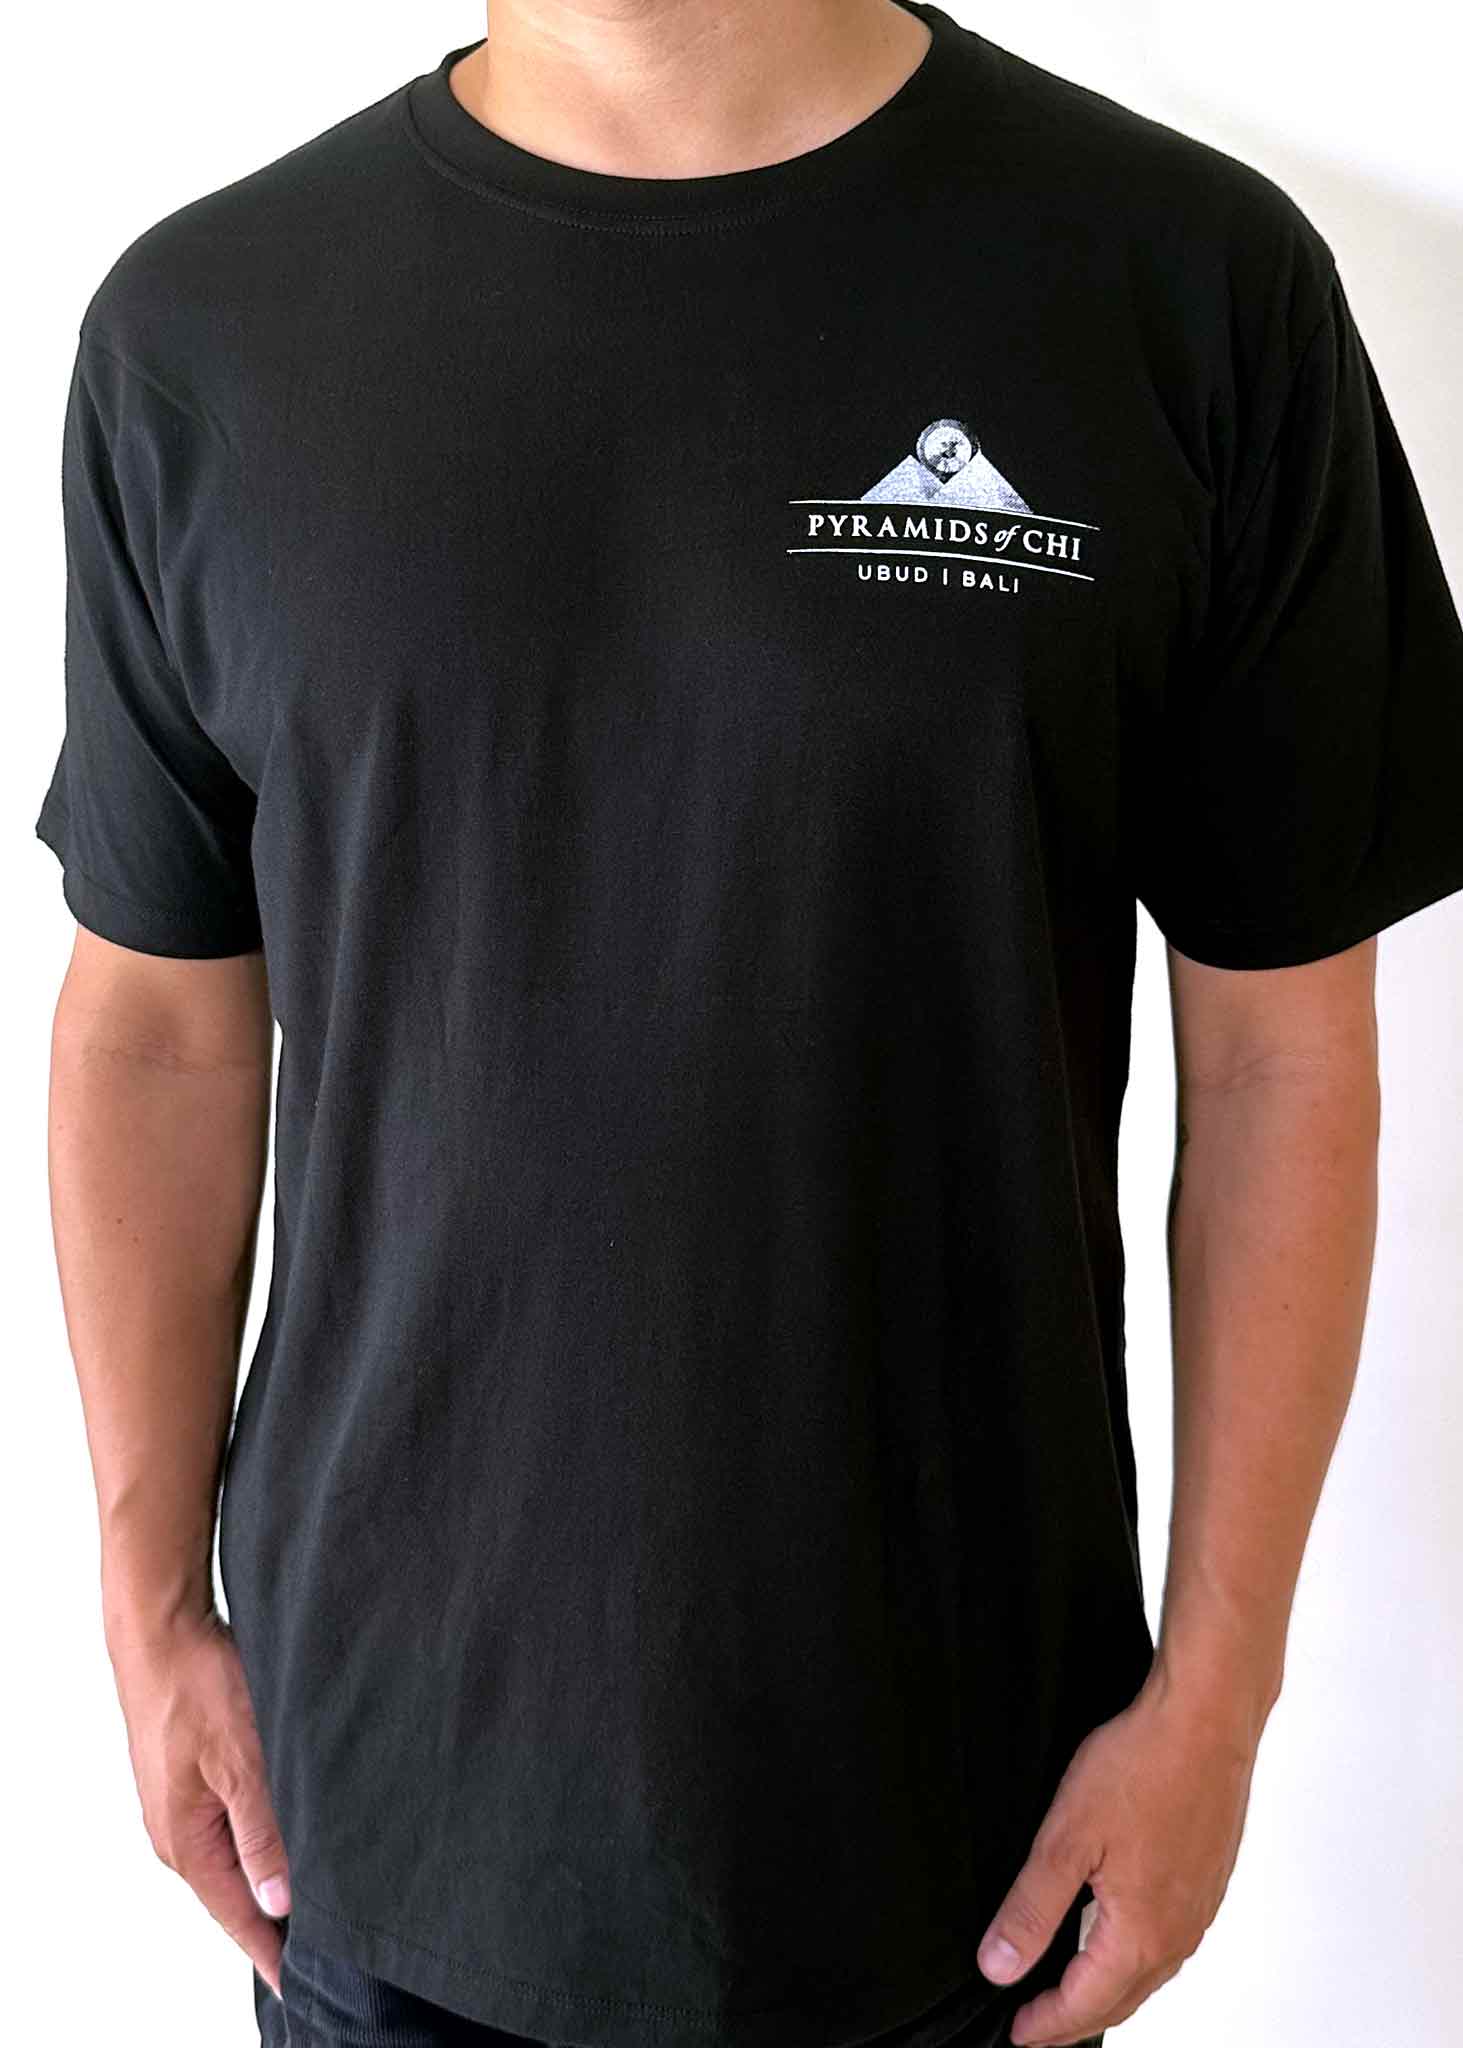 Pyramids of Chi Iconic Short Sleeve T-shirt | Black